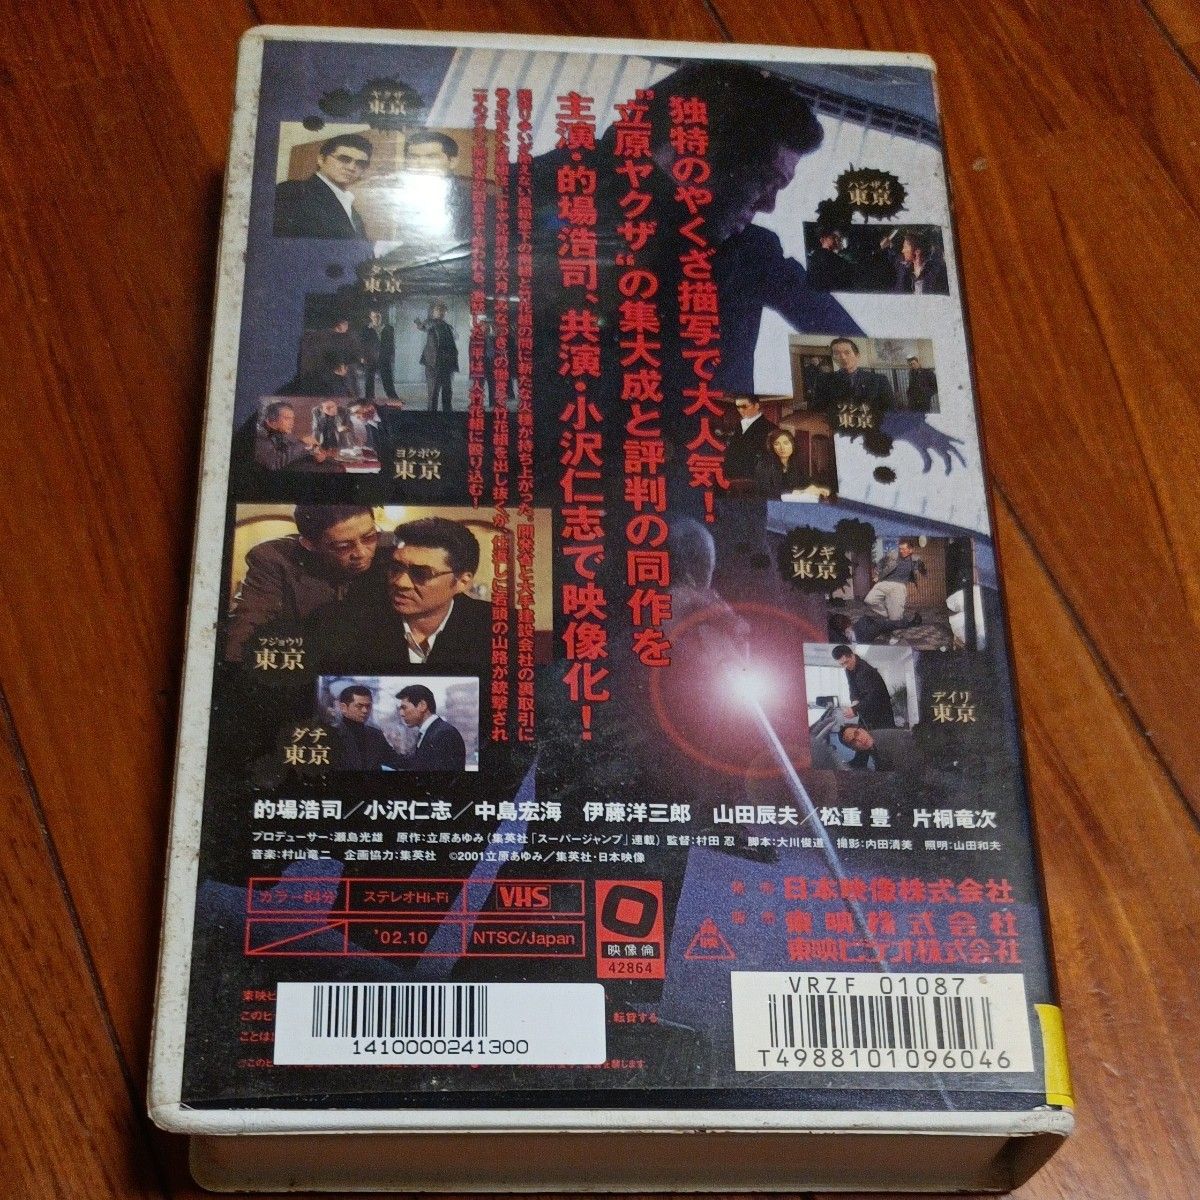 VHSです 東京 極道抗争勃発 立原あゆみ原作 小沢仁志 的場浩司 邦画 ヤクザ 2002年 ビデオ